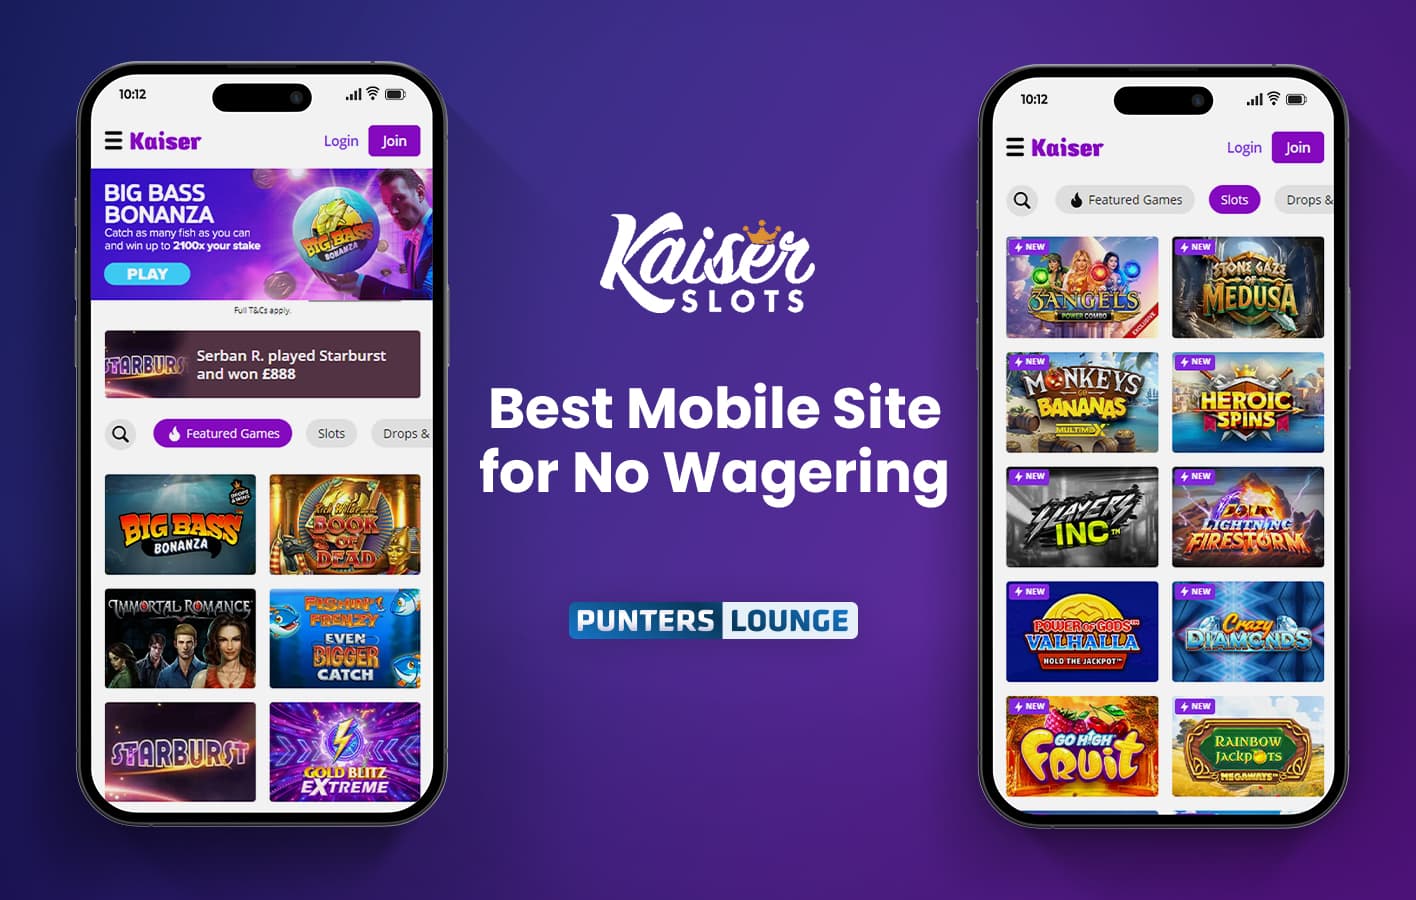 Kaiser Slots Mobile Slot Sites Desktop Image